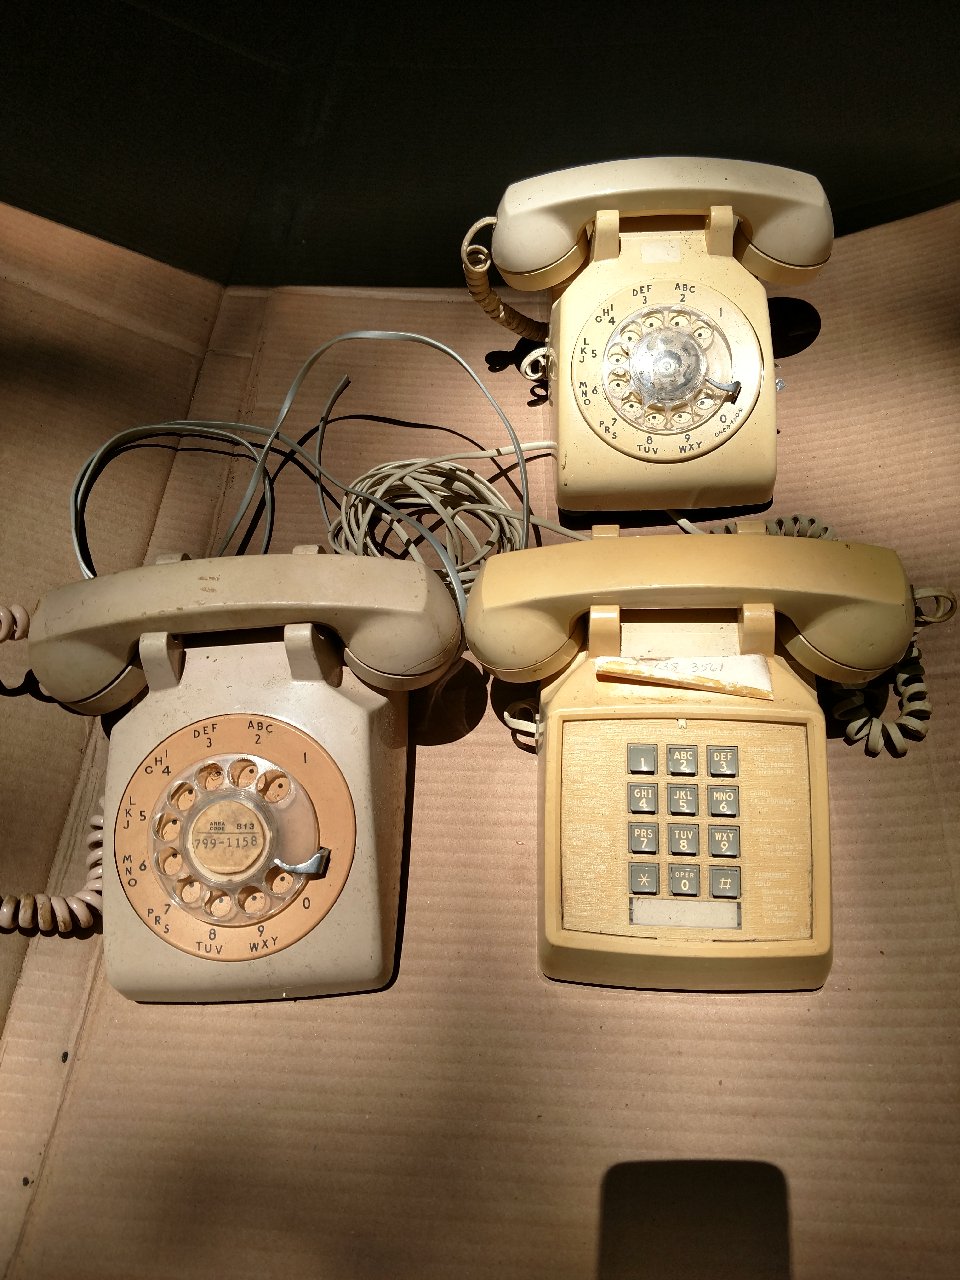 1980 Dial & PB Telephones.jpg